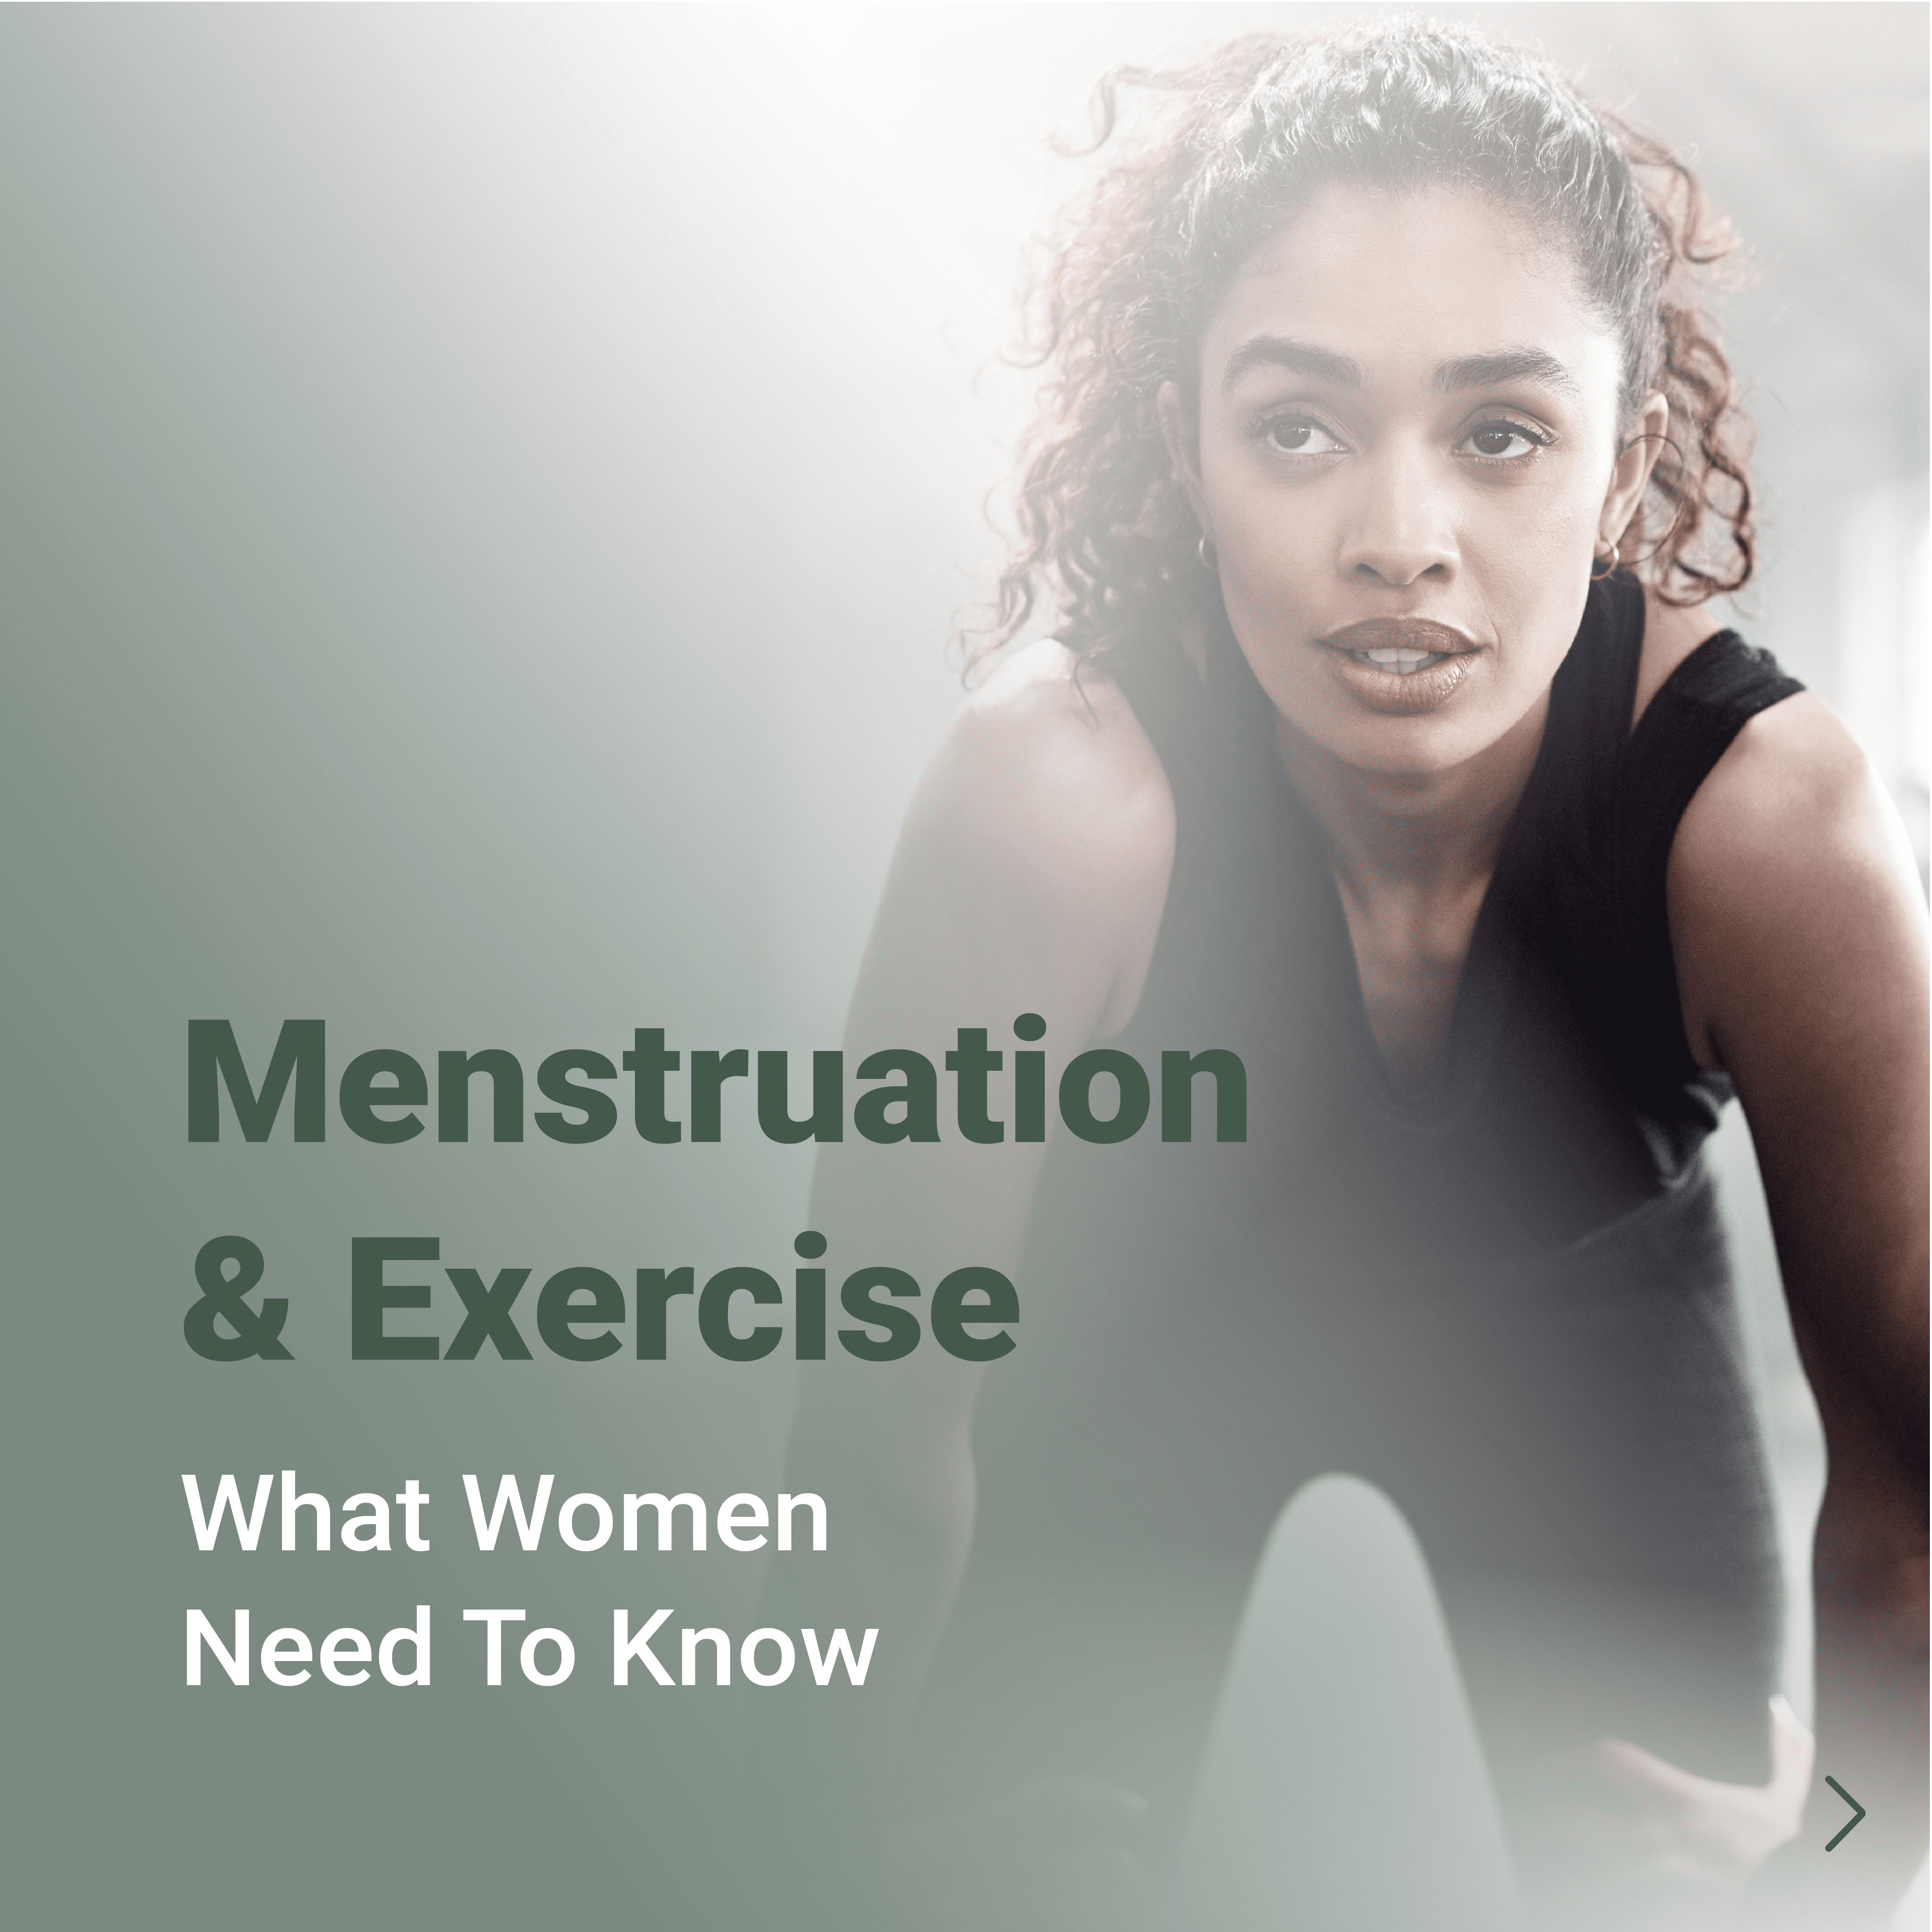 Menstruation & Exercise